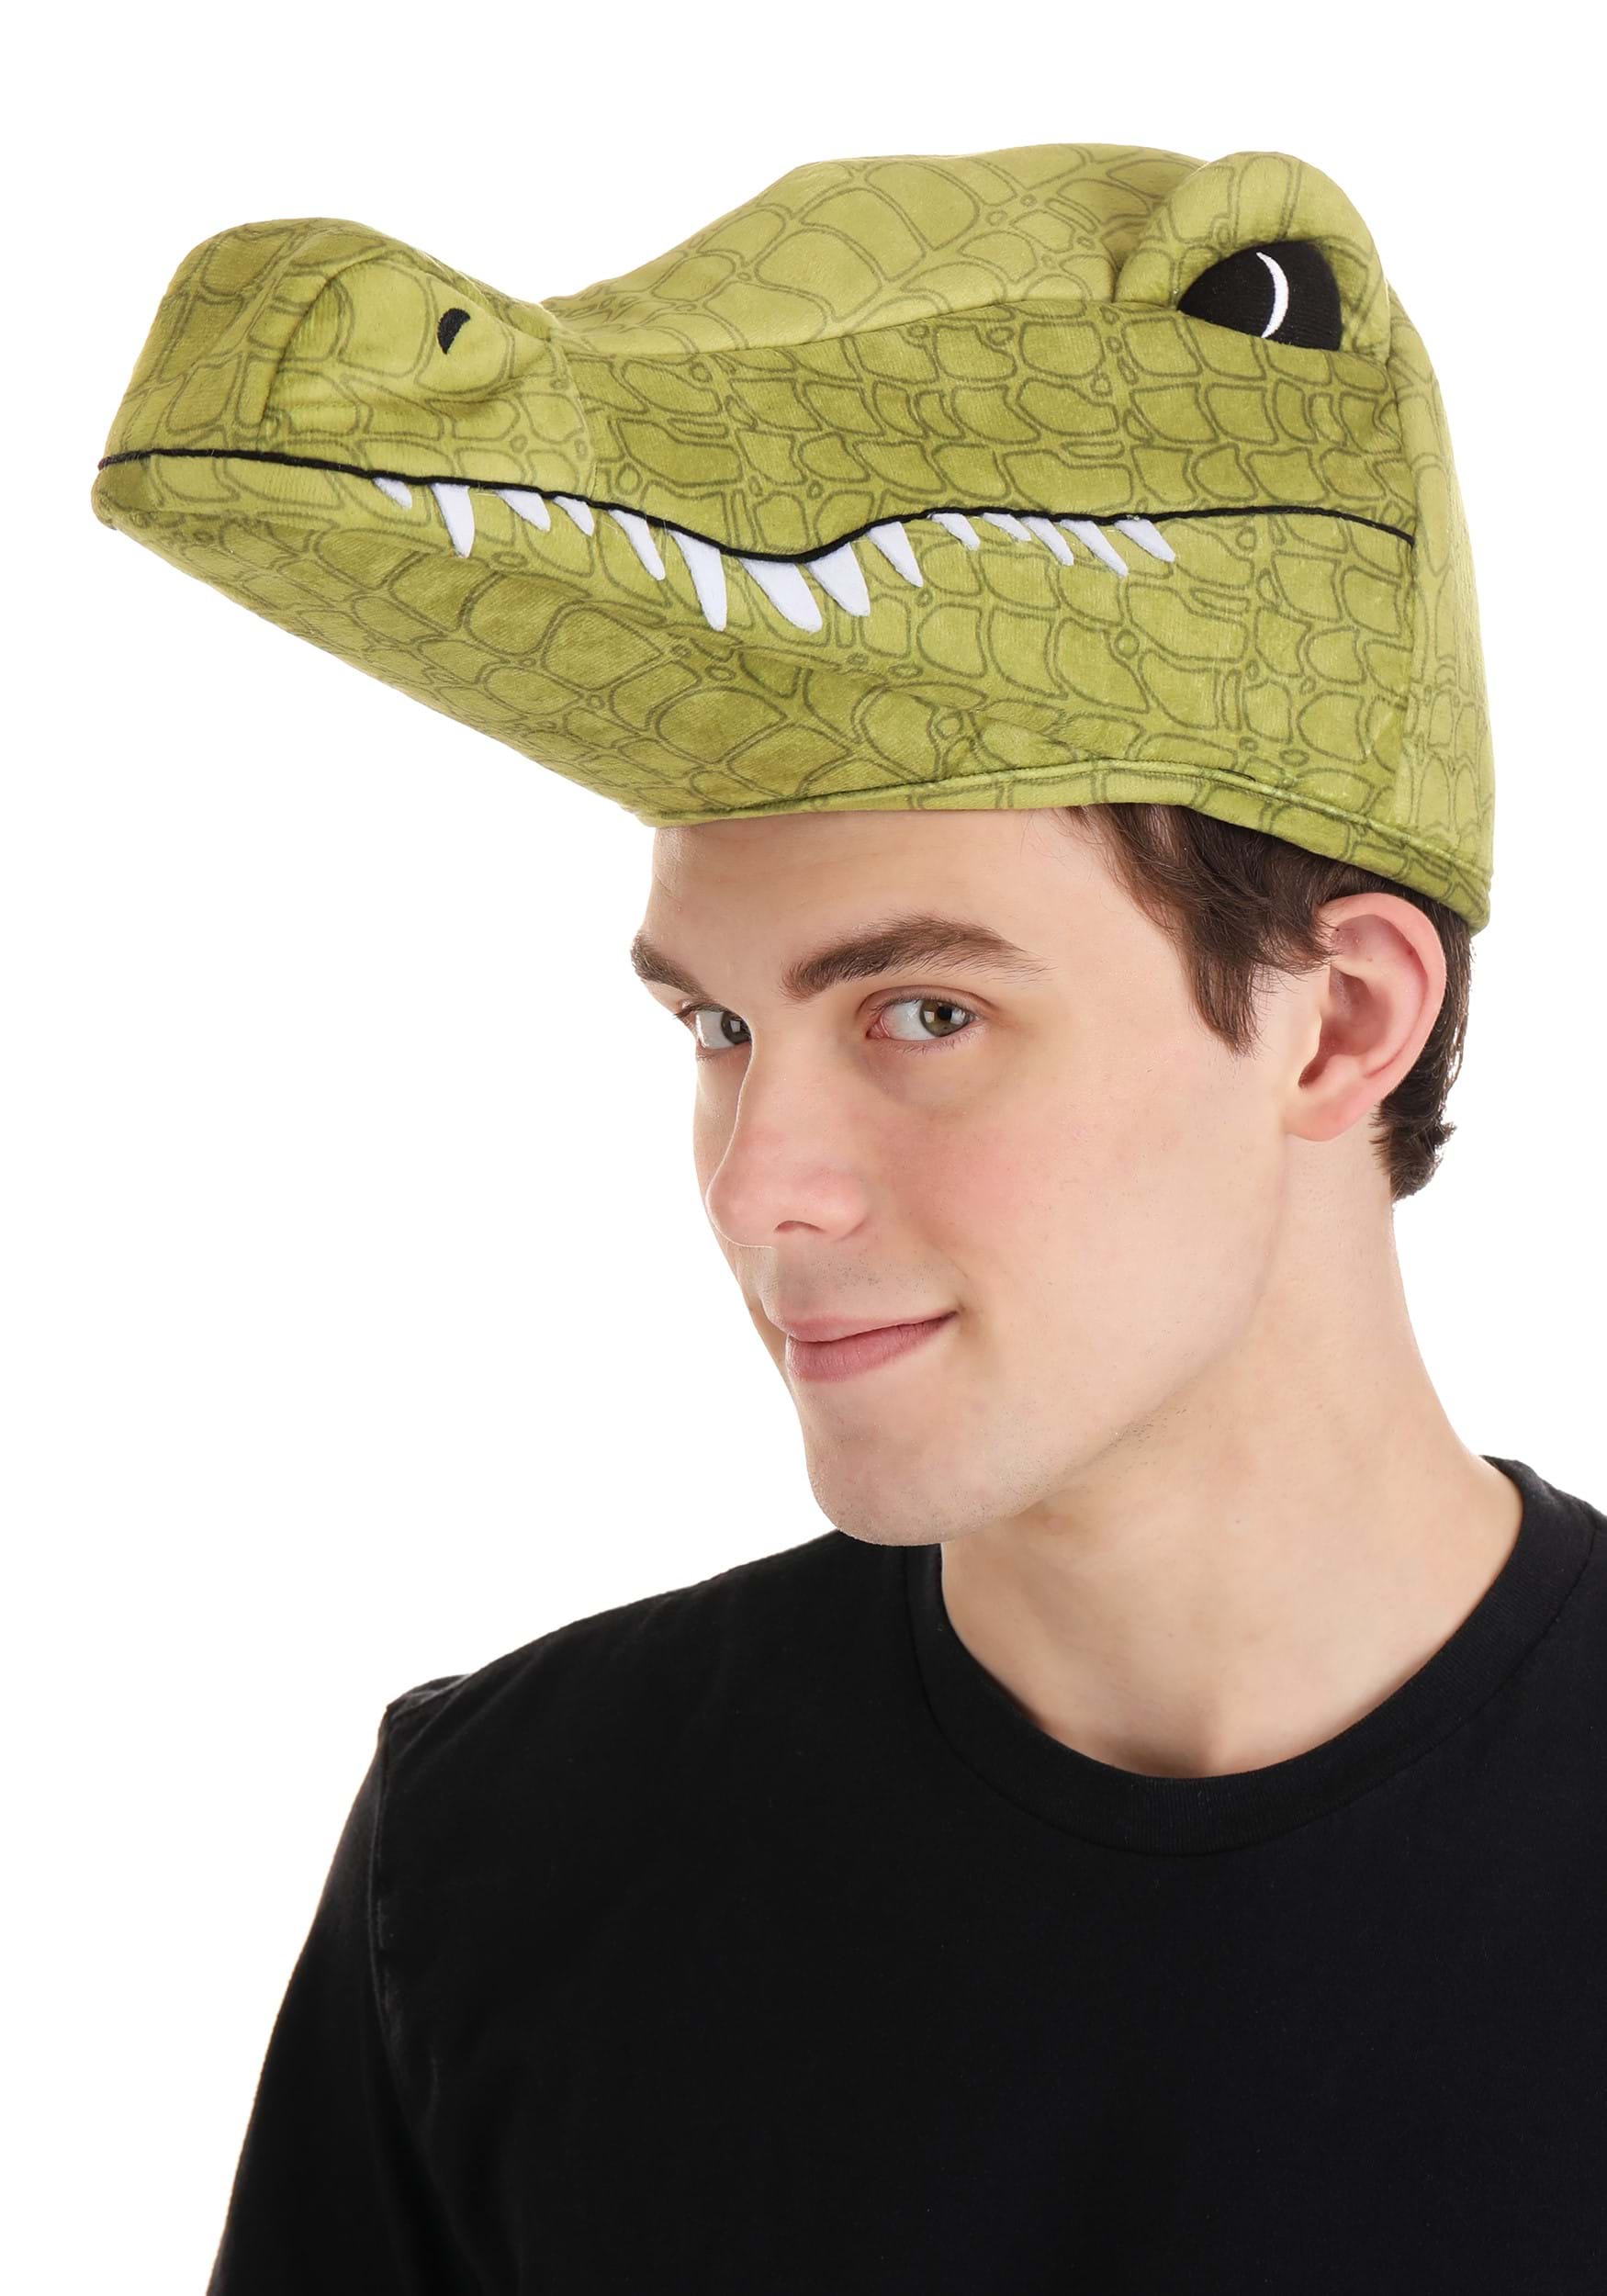 Alligator Plush Costume Hat Accessory | Animal Hats